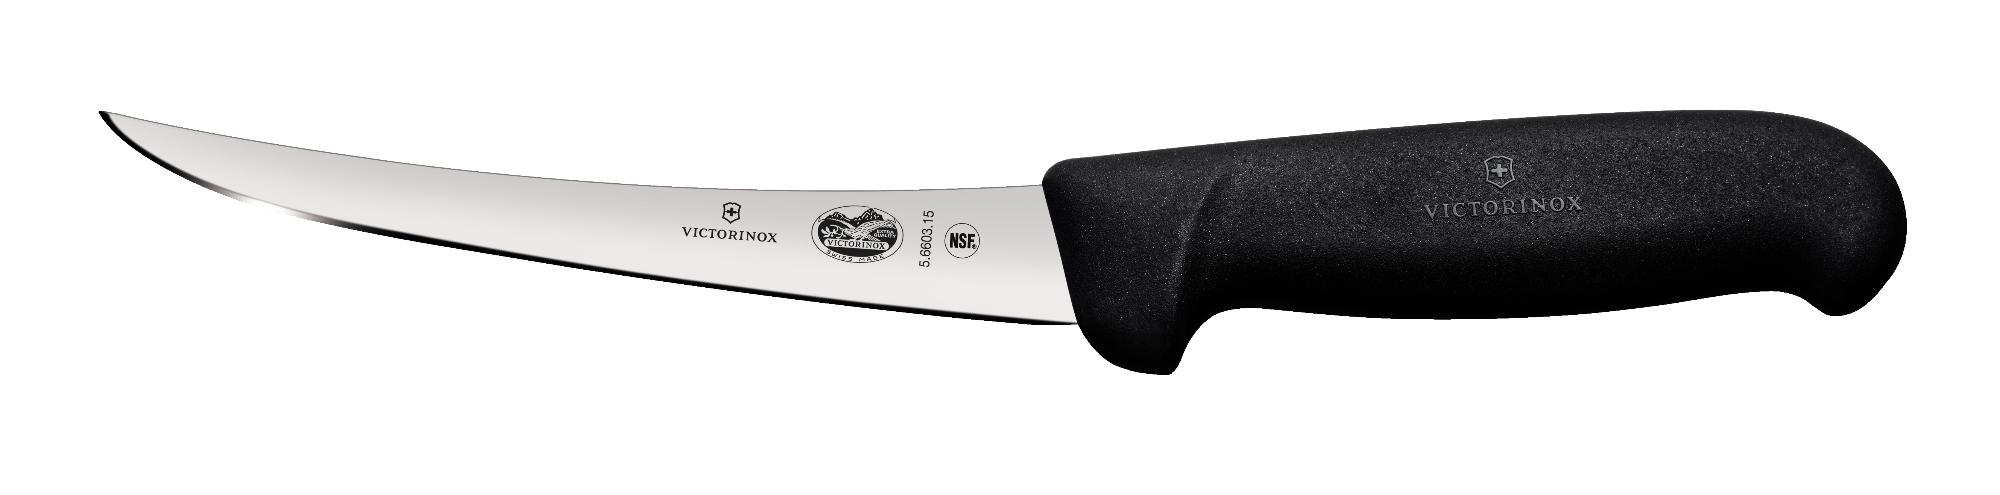 Fibrox deboning knife, bent blade, 15 cm